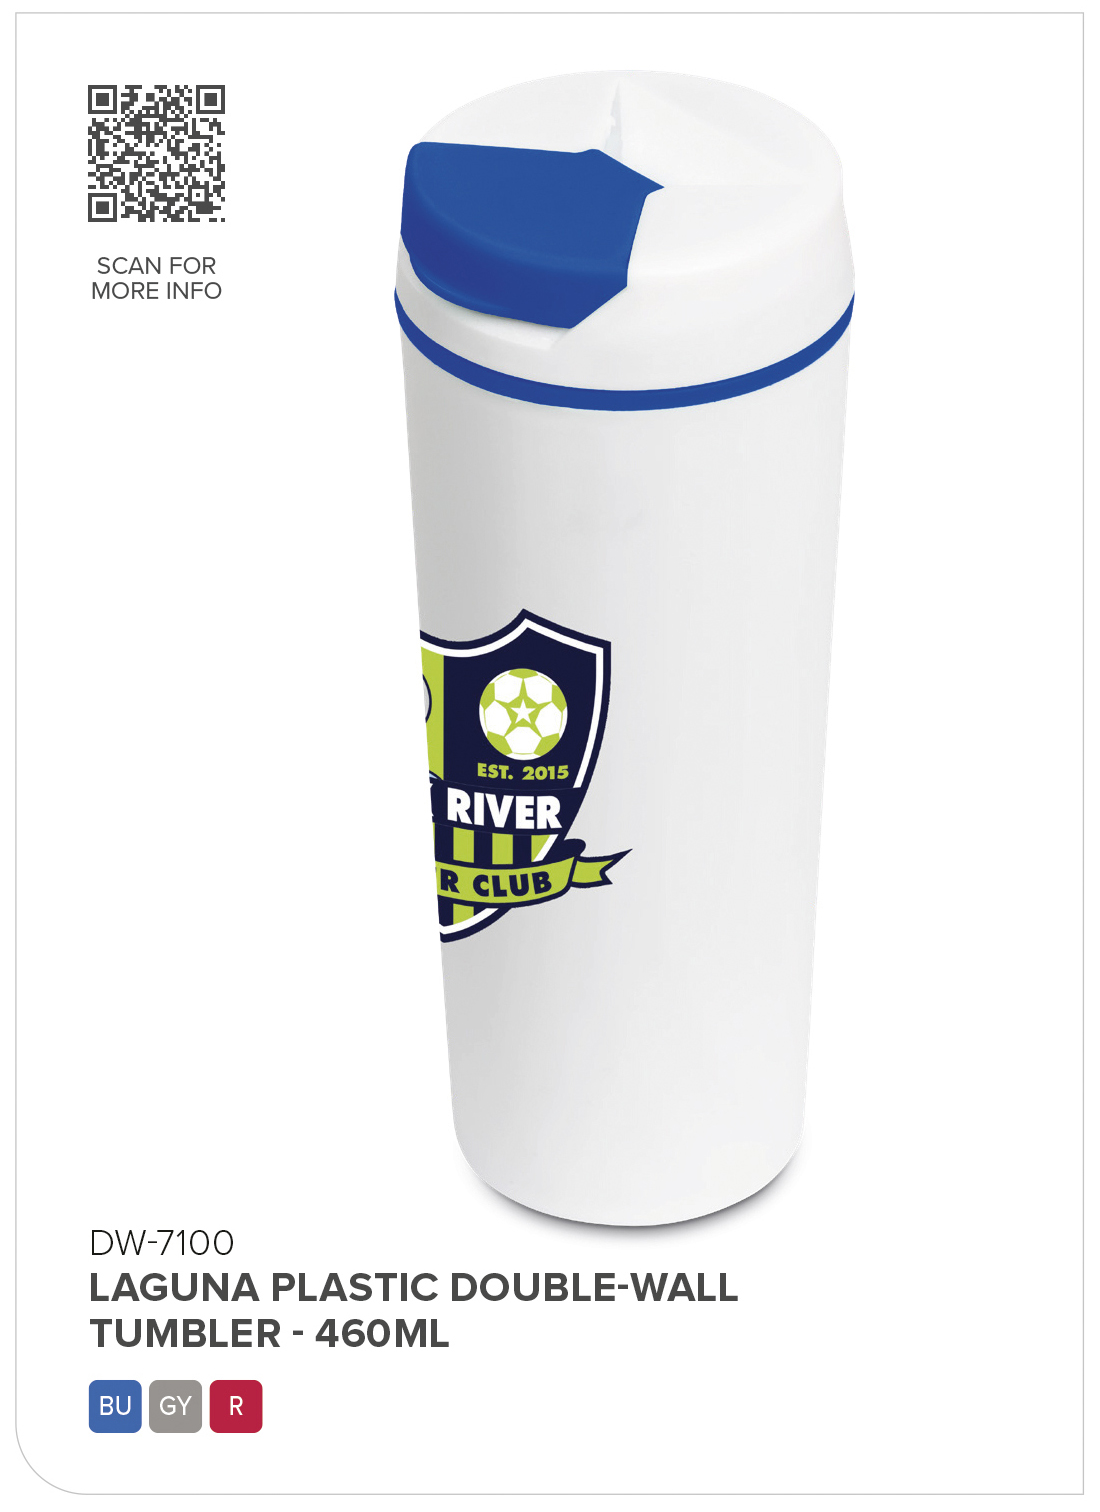 Laguna Plastic Double-Wall Tumbler - 460ml